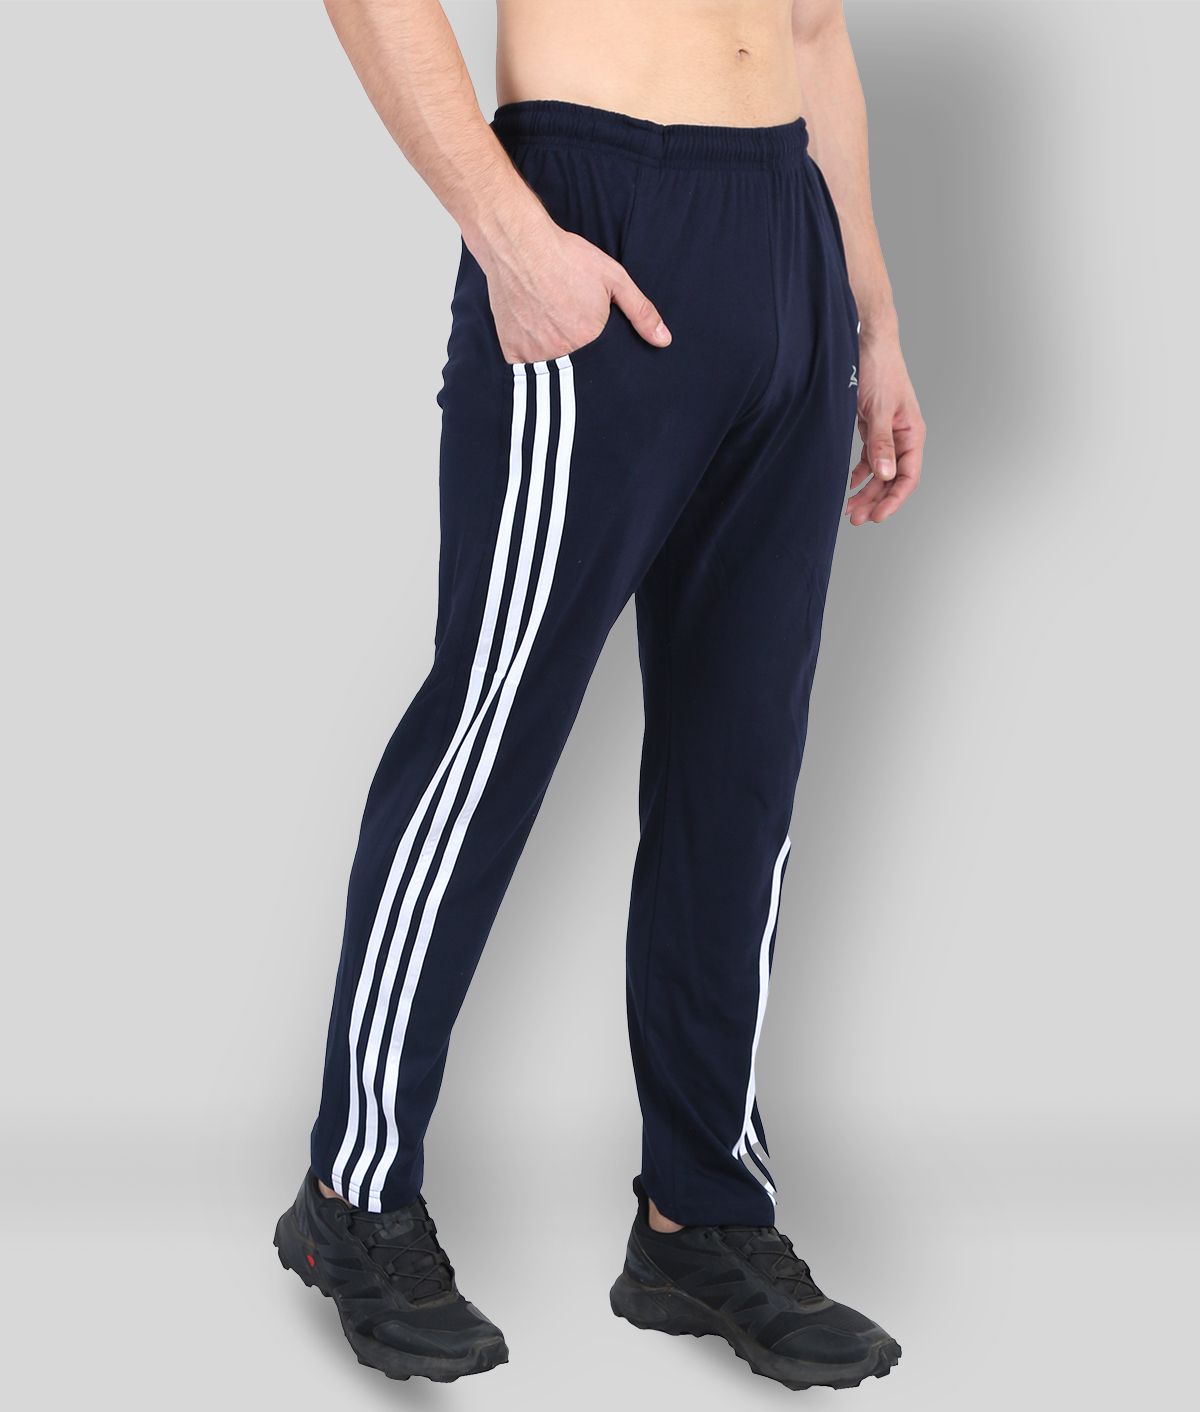 Zeffit - Navy Blue Cotton Blend Men's Sports Trackpants ( Pack of 1 )